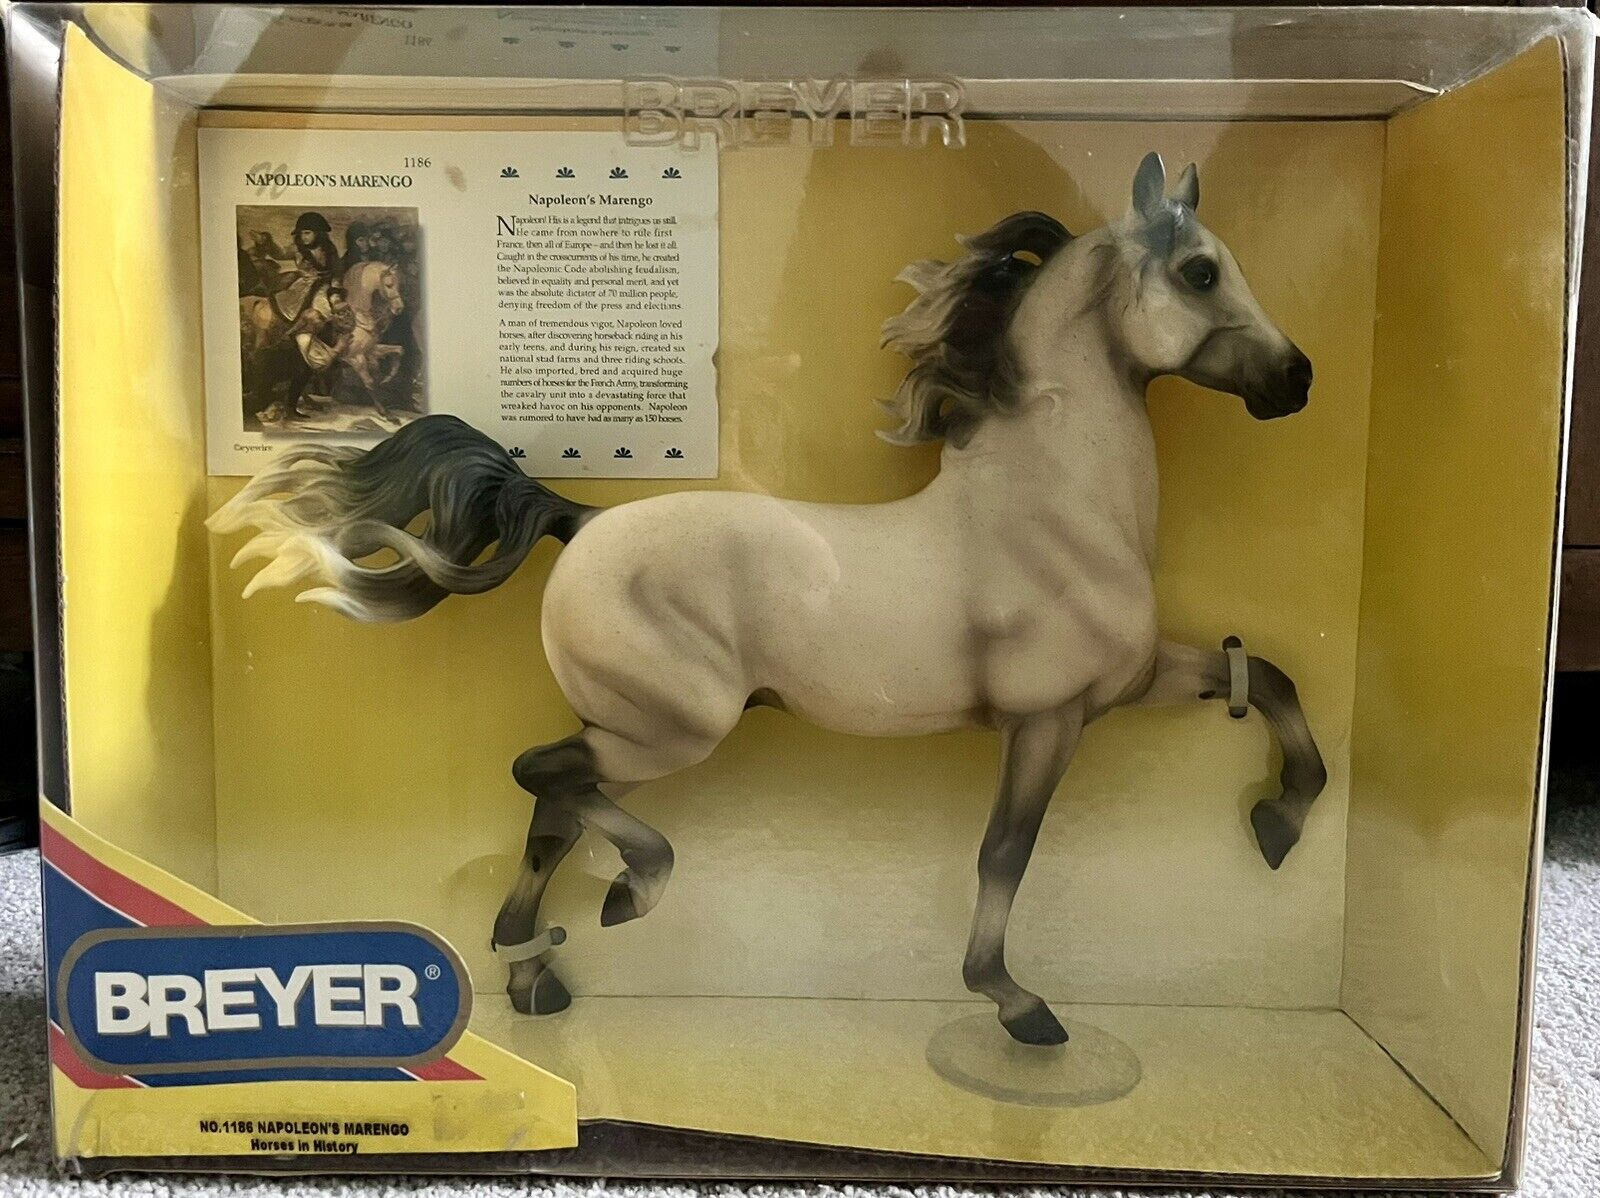 Breyer Horse #1186 “Napoleon’s Marengo Horses In History”